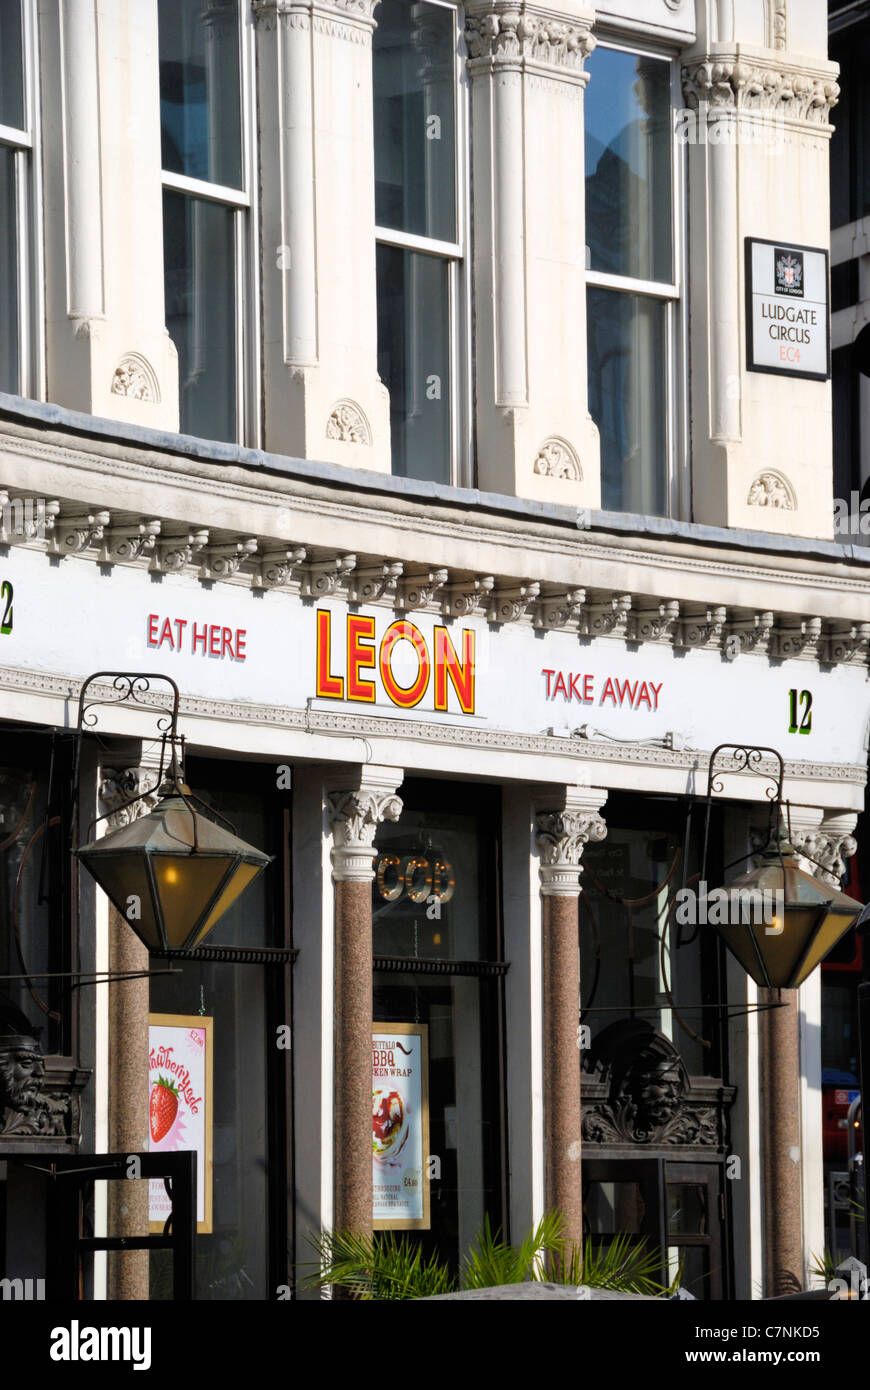 Leon Restaurant at Ludgate Circus, London, England Stock Photo